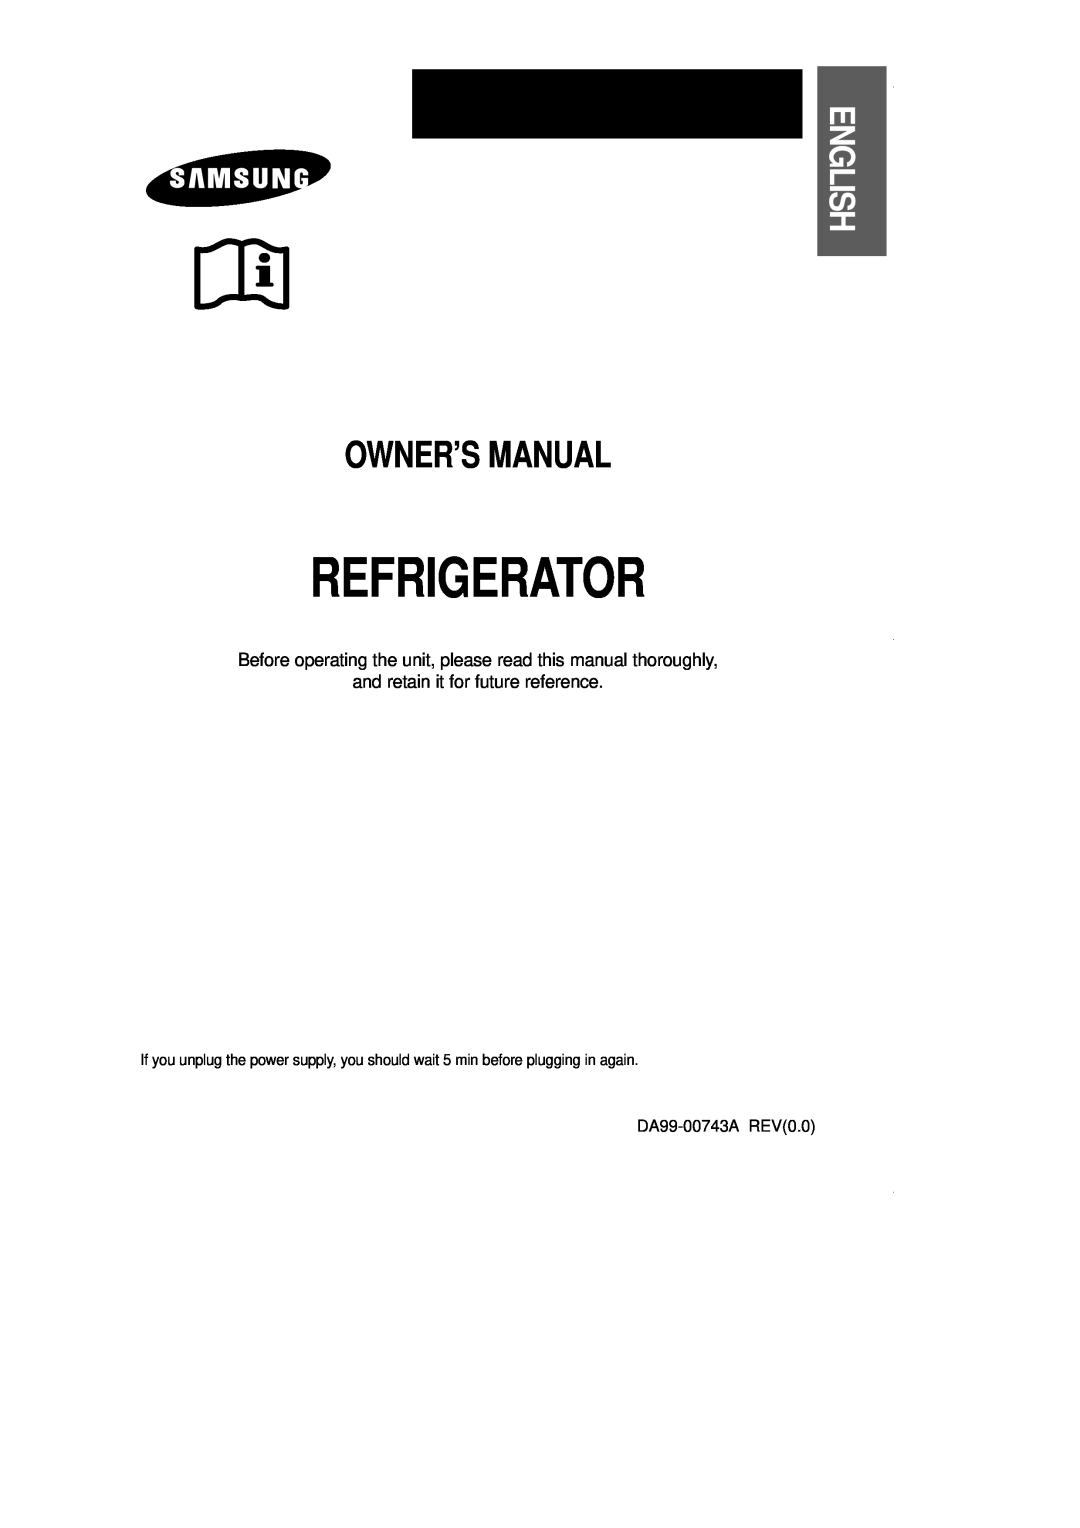 Samsung SR519DP owner manual English, Refrigerator, Owner’S Manual 